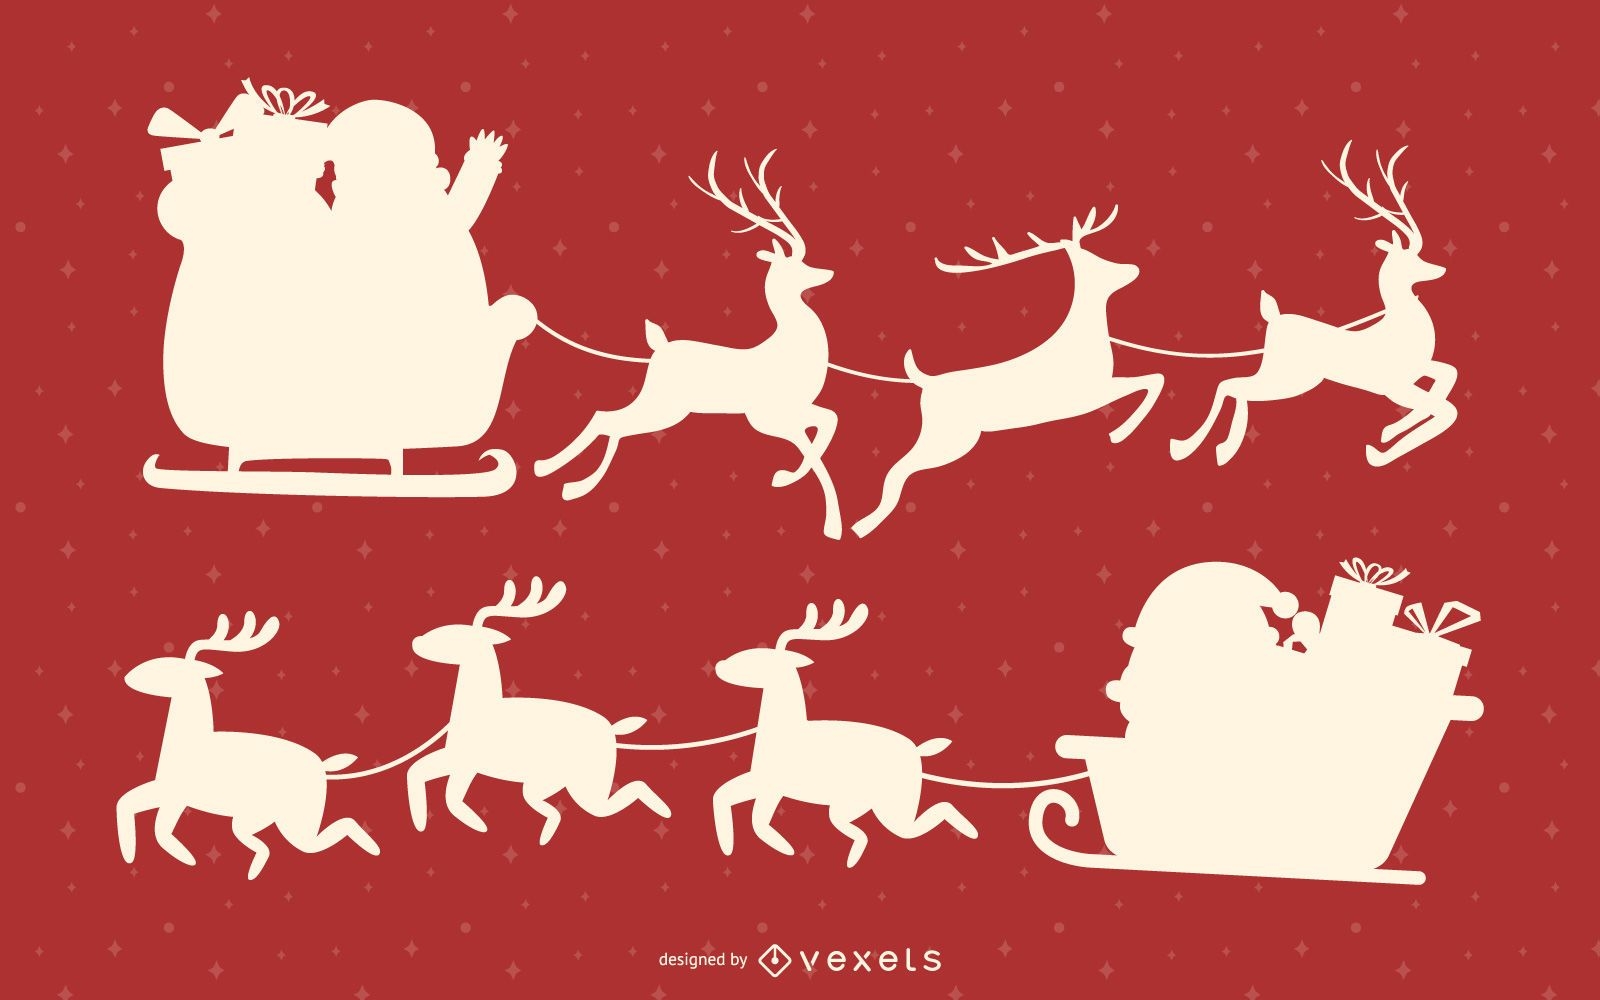 Santa sleigh silhouette set